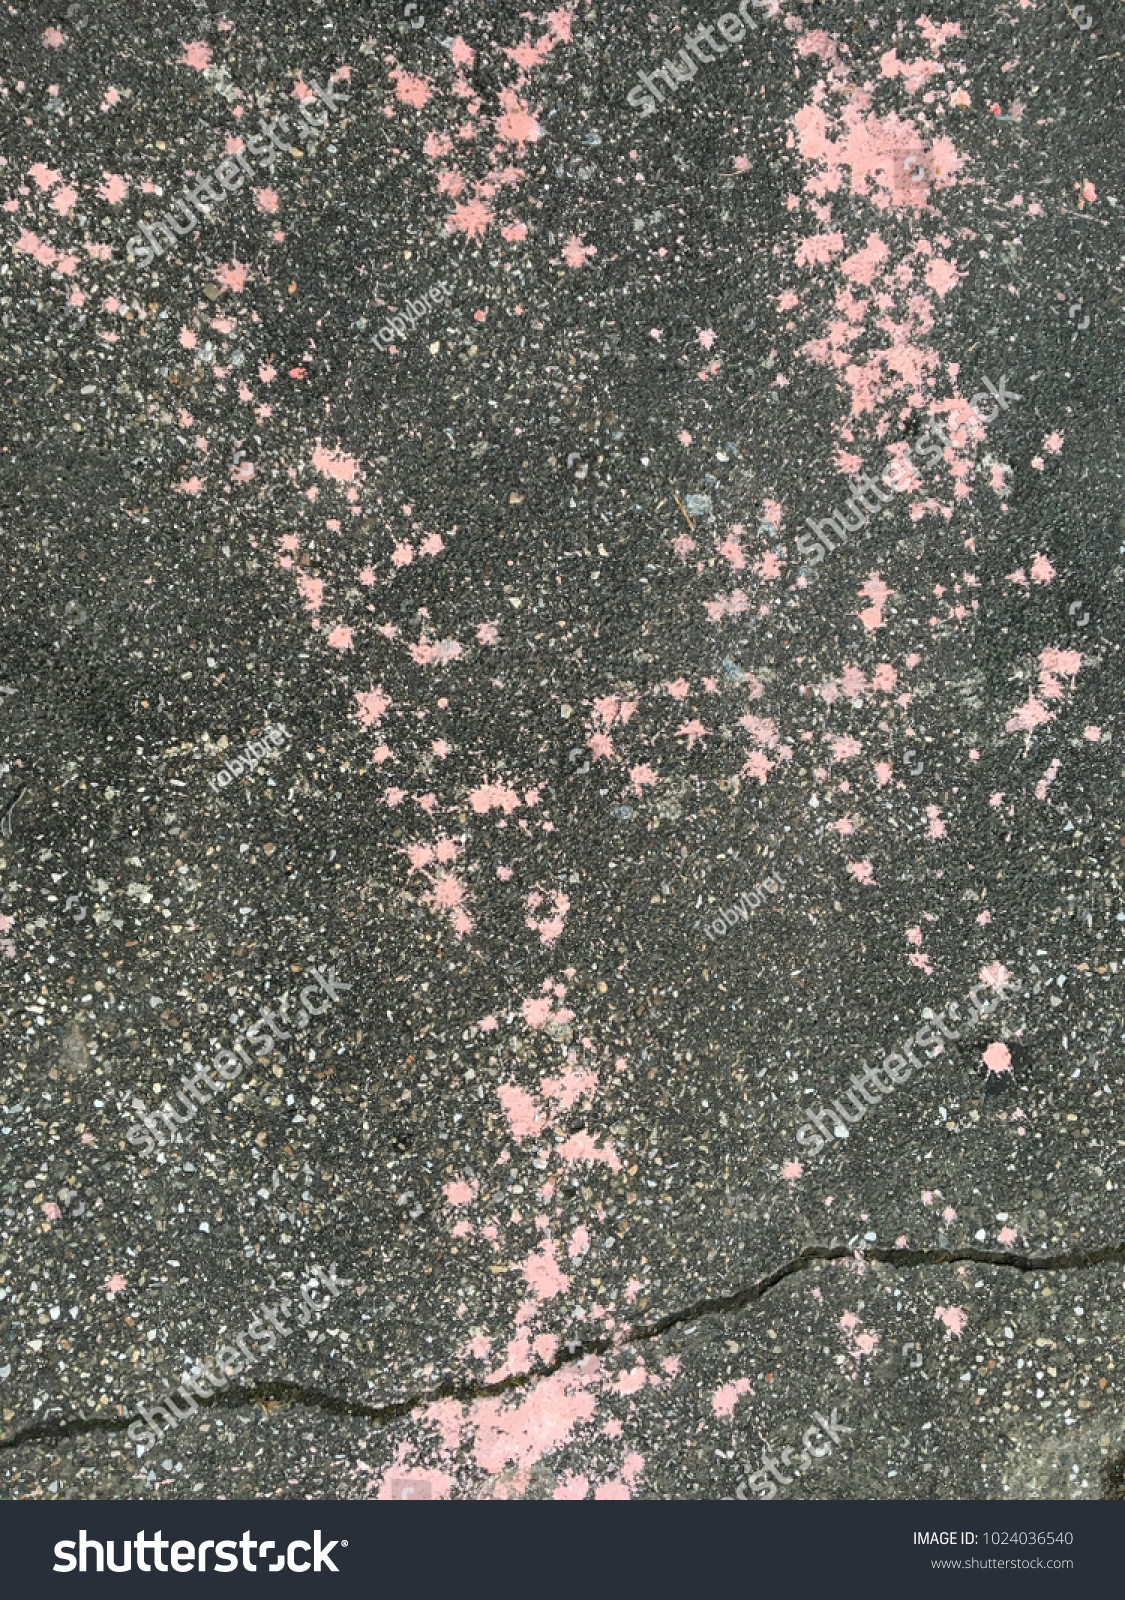 Pink Paint Drops On Black Asphalt Stock Image Download Now